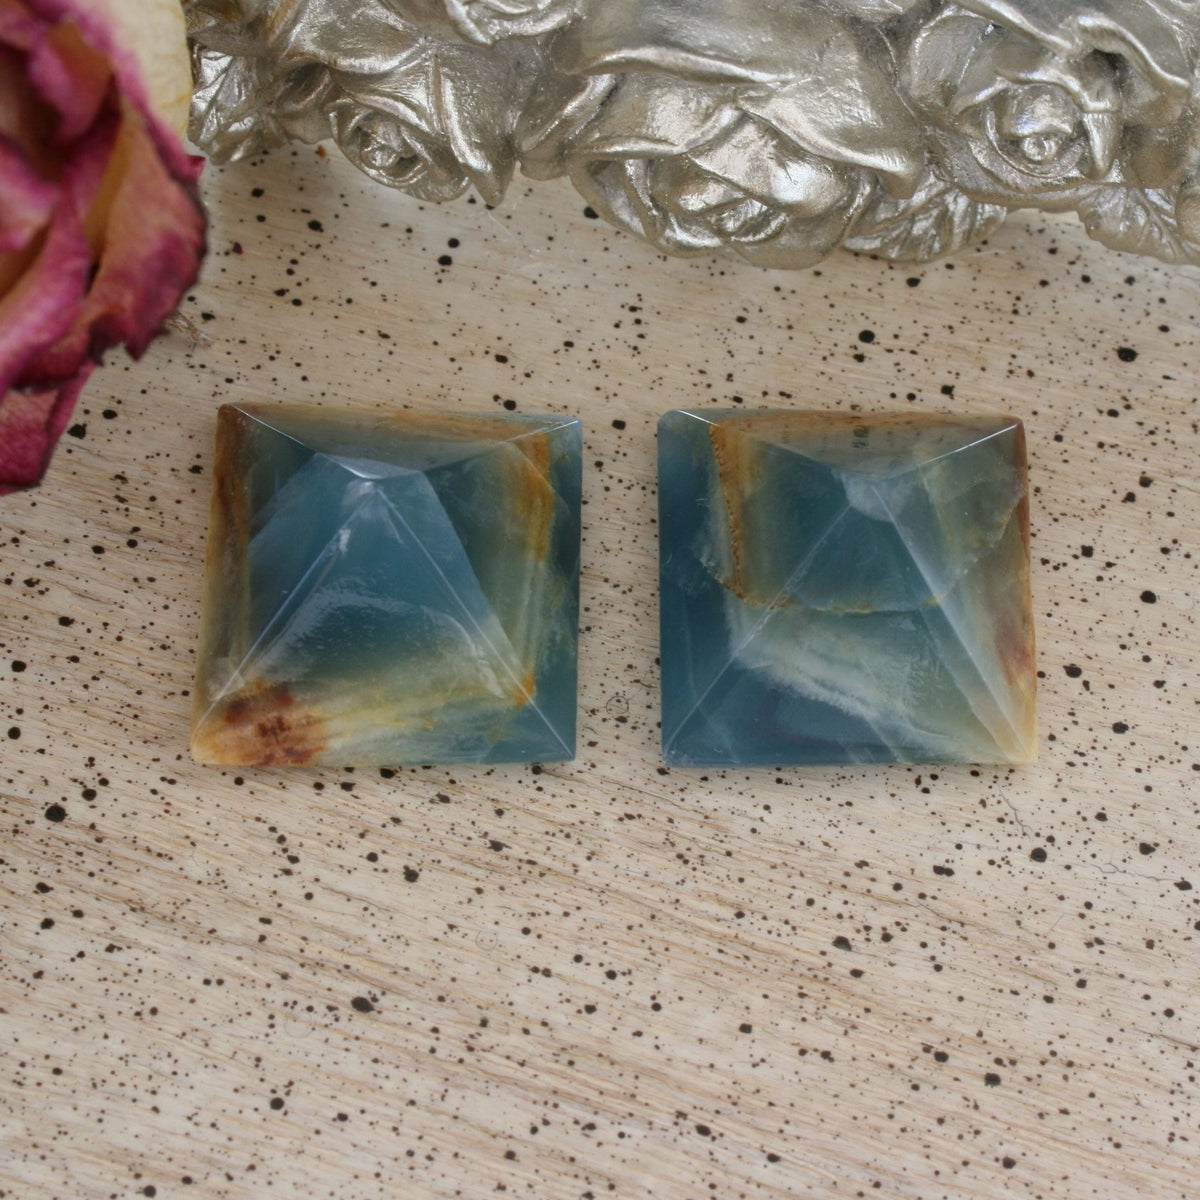 Blue Calcite / Blue Onxy Pyramid from Argentina, also called Lemurian Aquatine Calcite, LGPY1